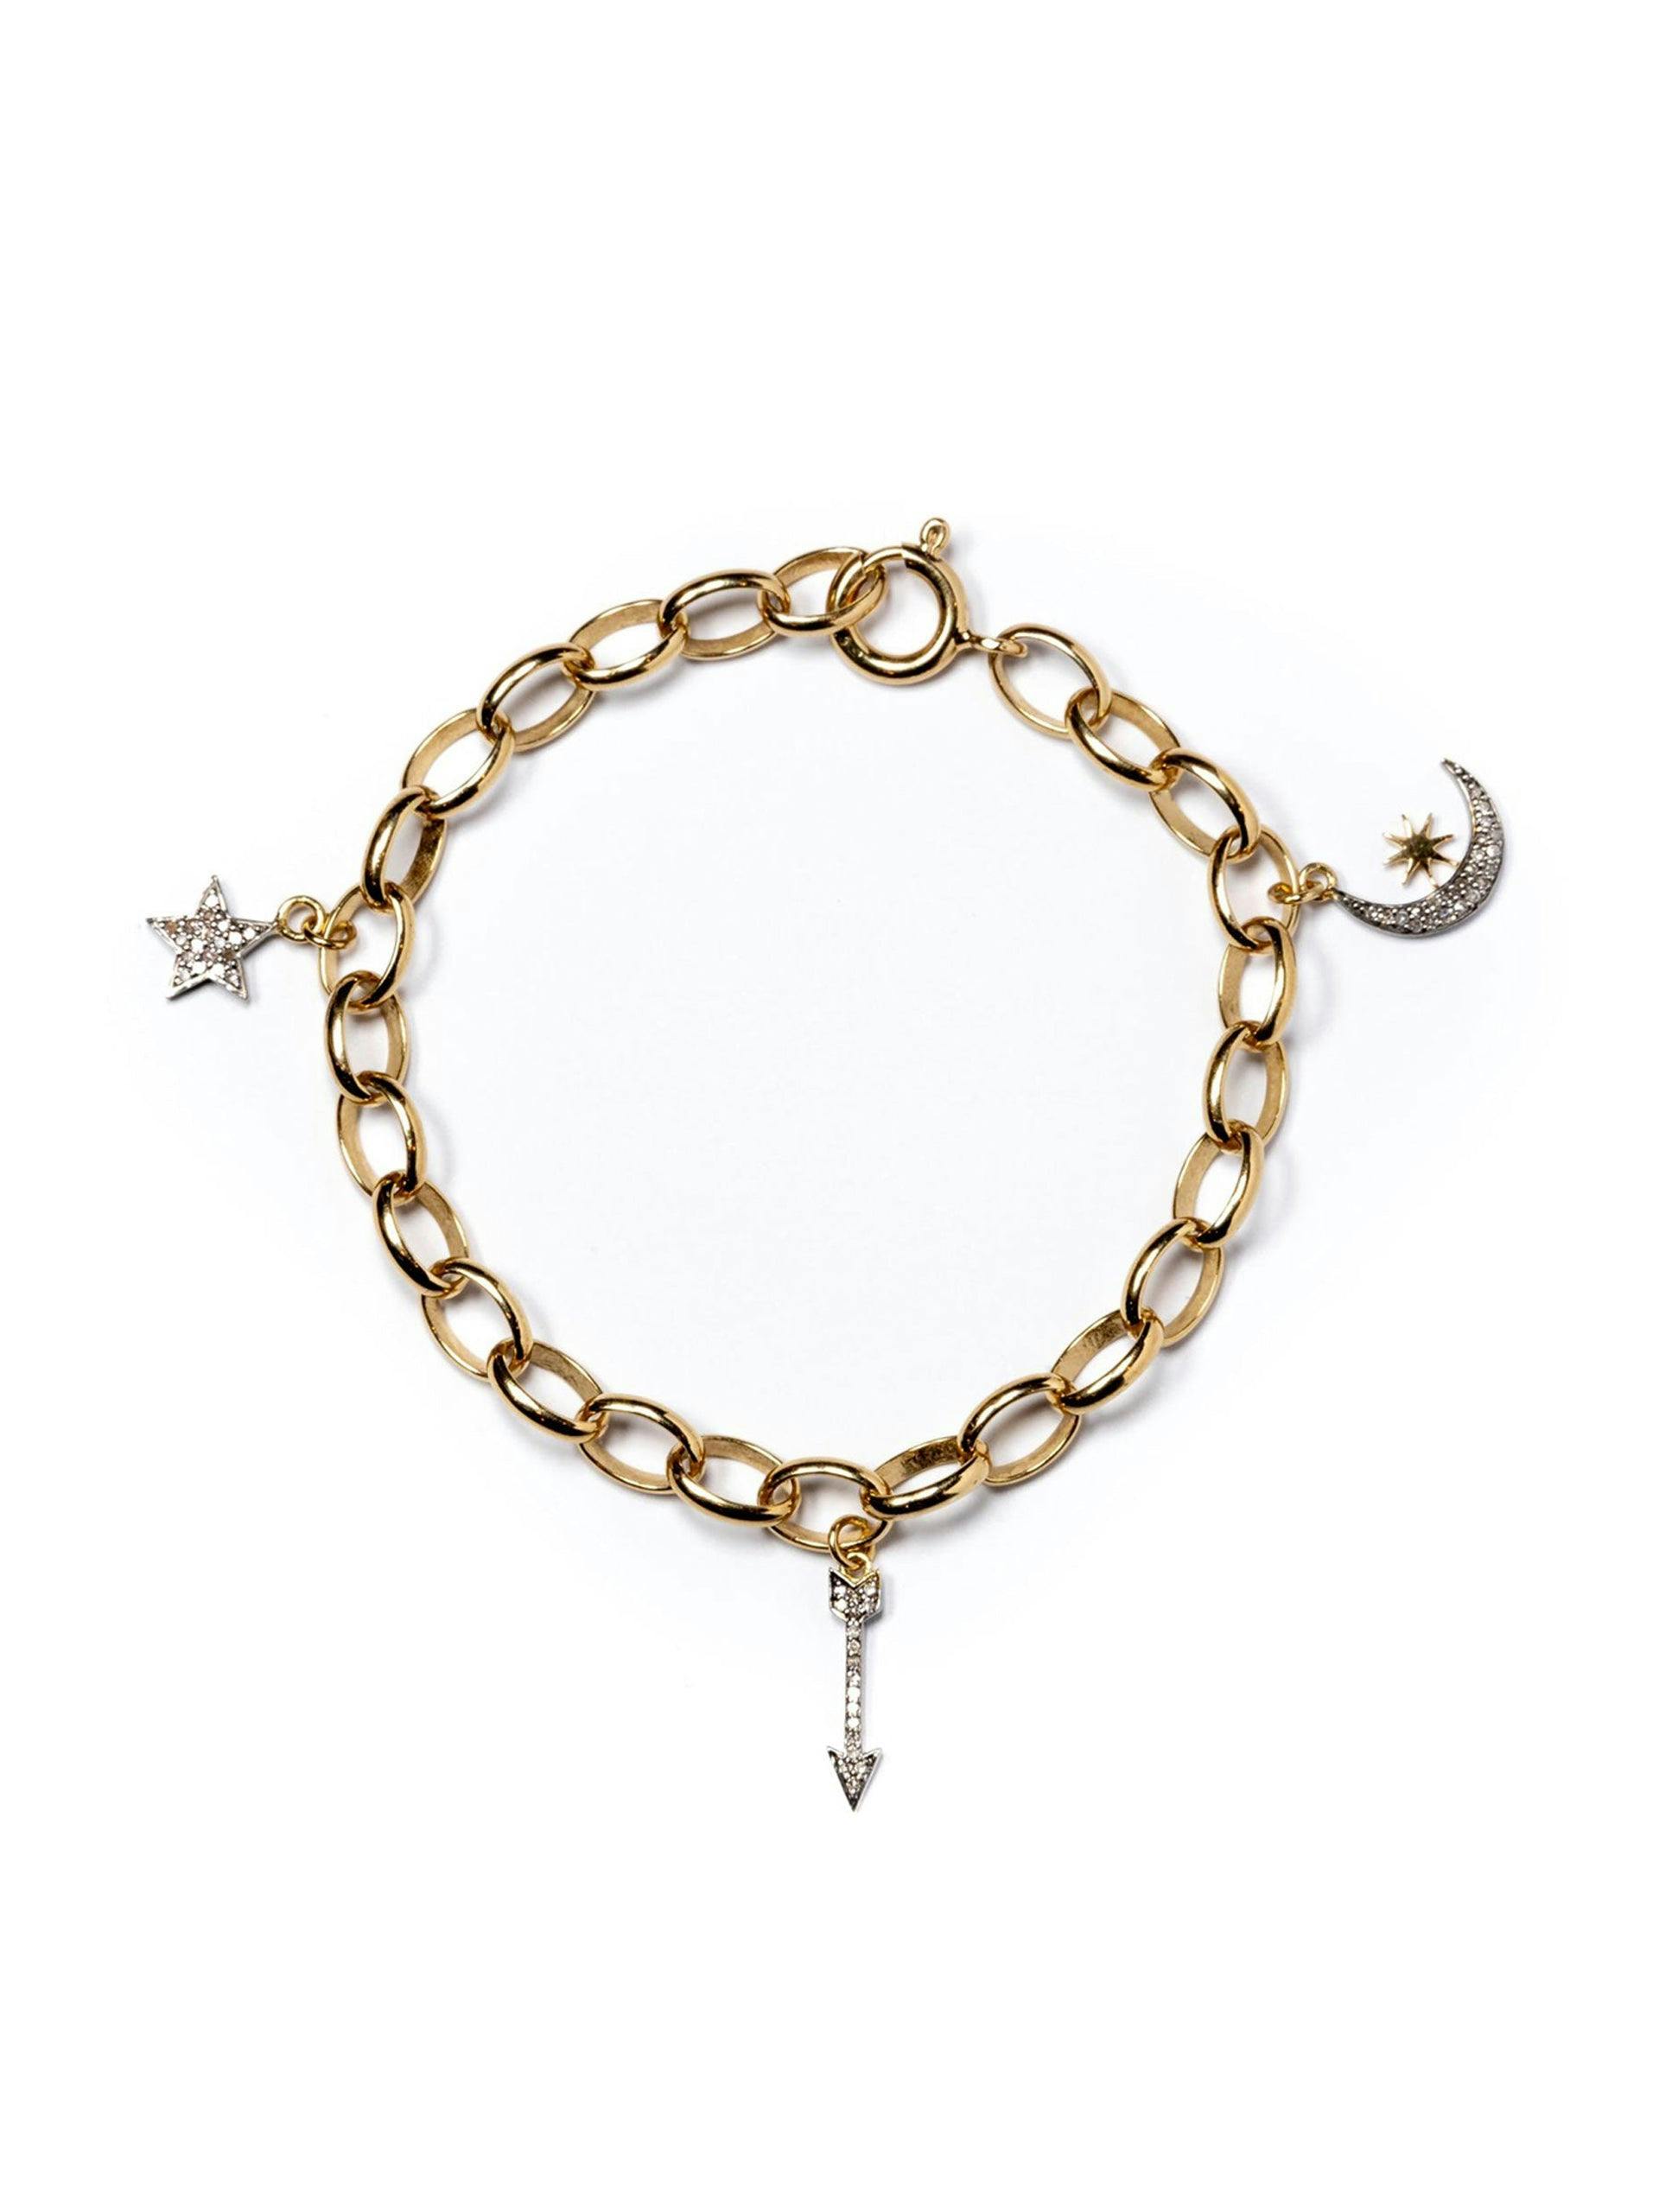 Diamond moon and stars charm bracelet